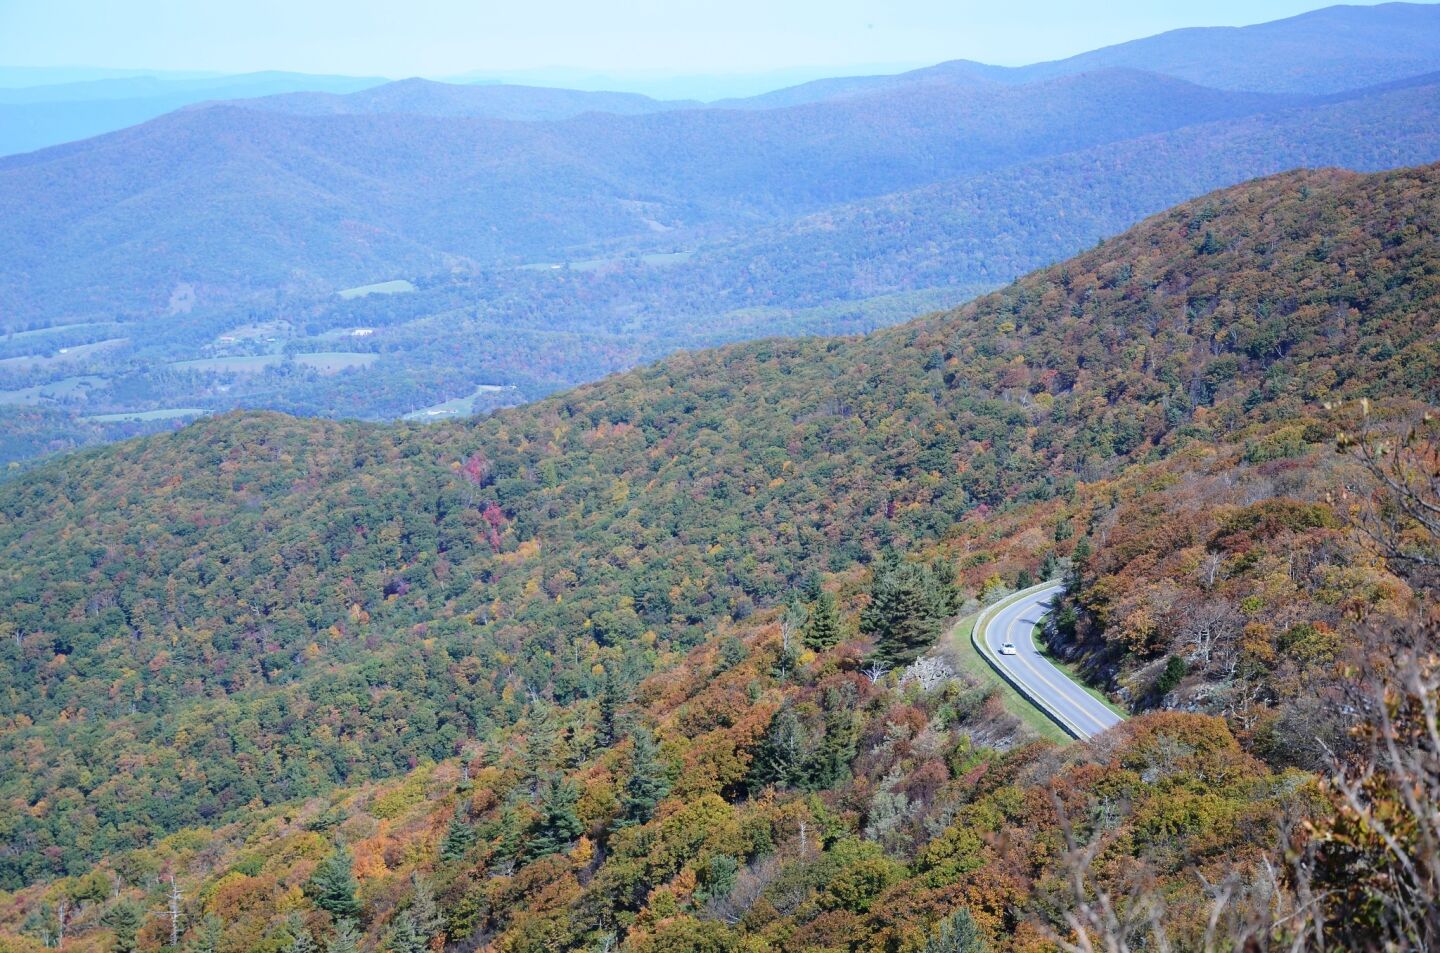 A tiny stretch of road is visible Oct. 20 from Little Stony Man Trail, along the Appalachian Trail near Skyland Resort, Shenandoah National Park, Va.